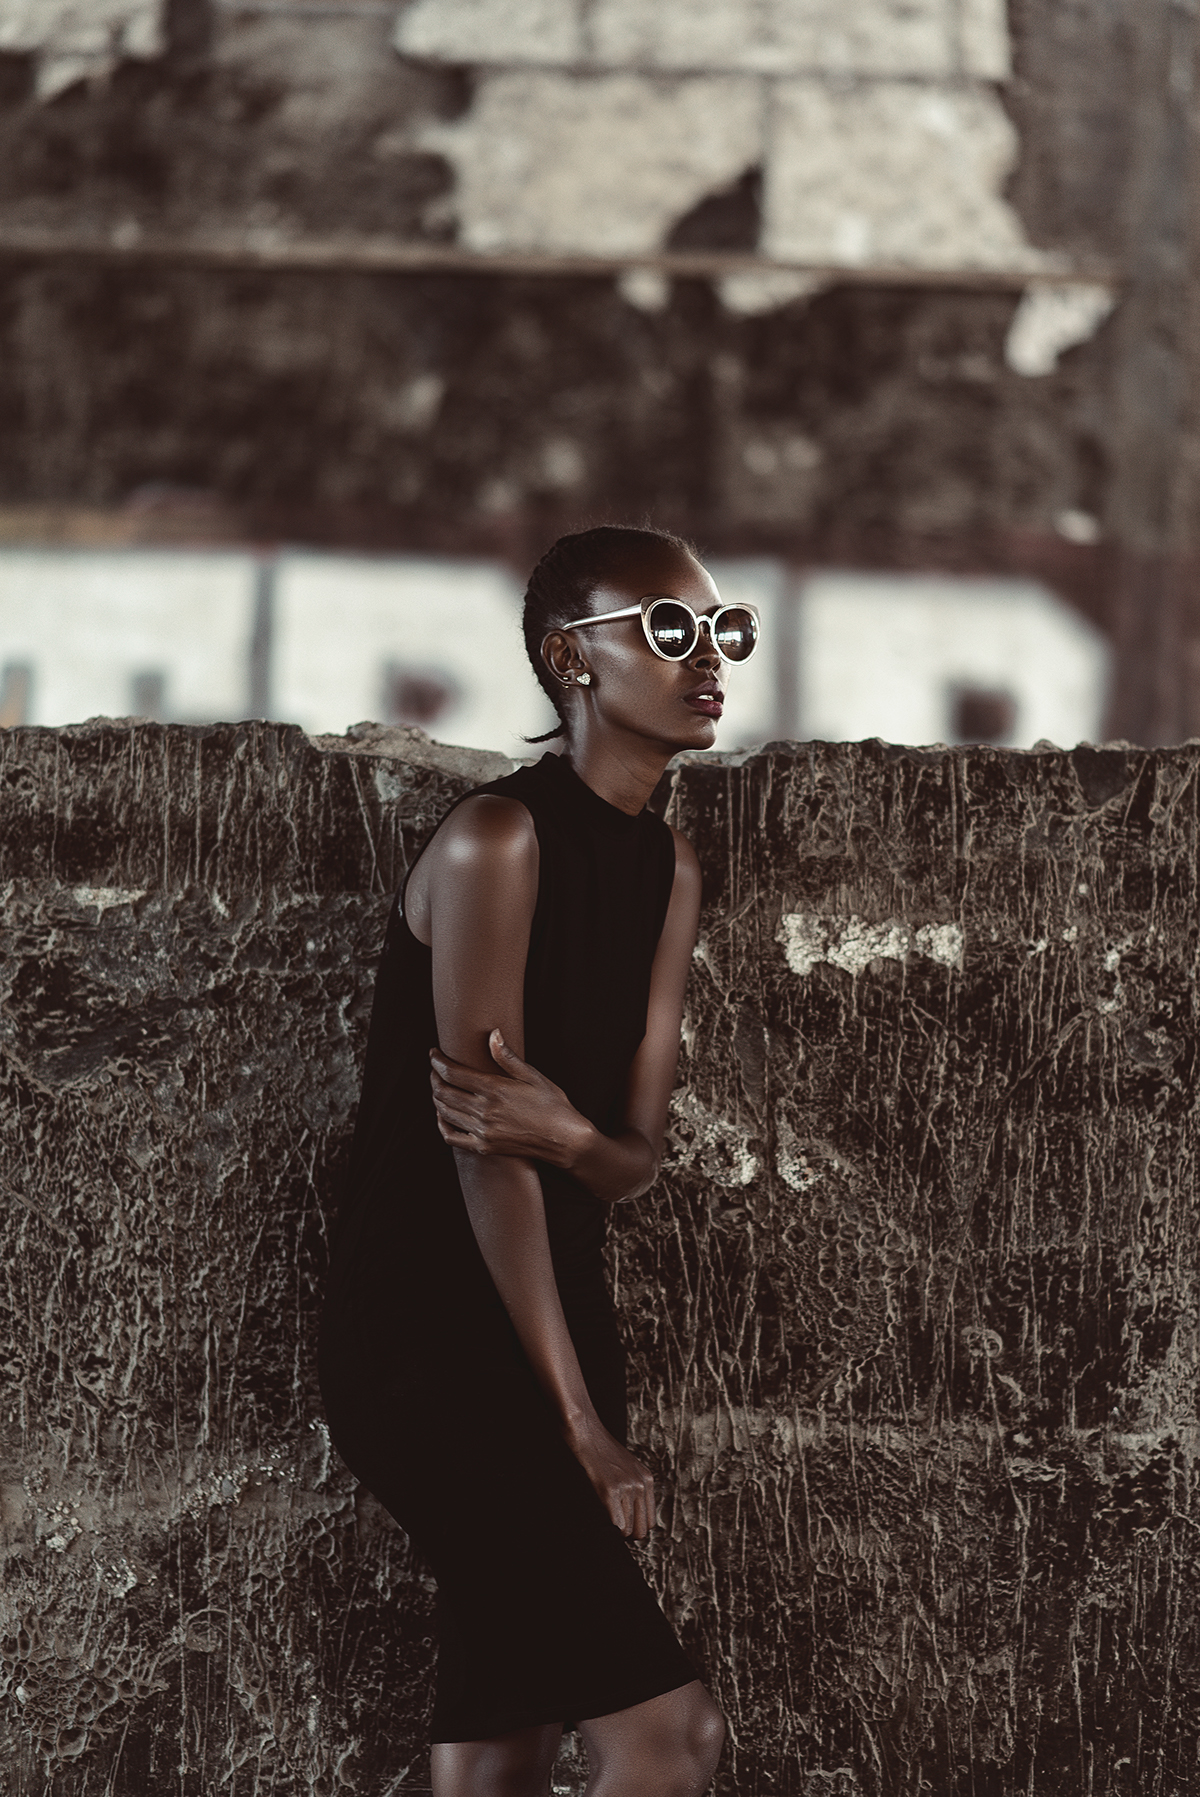 #naturallights #melanin #beauty #blackfashion #zenmag #afrimag #africanmodel #ogsstudios #blackskin #adverts #tanzania #daressalaam #vscotz #weshootrawtz #editorialafrica #fashion #tanzania #daressalaam #nikon #blackandwhite #portraitpage #85mm #primelenses